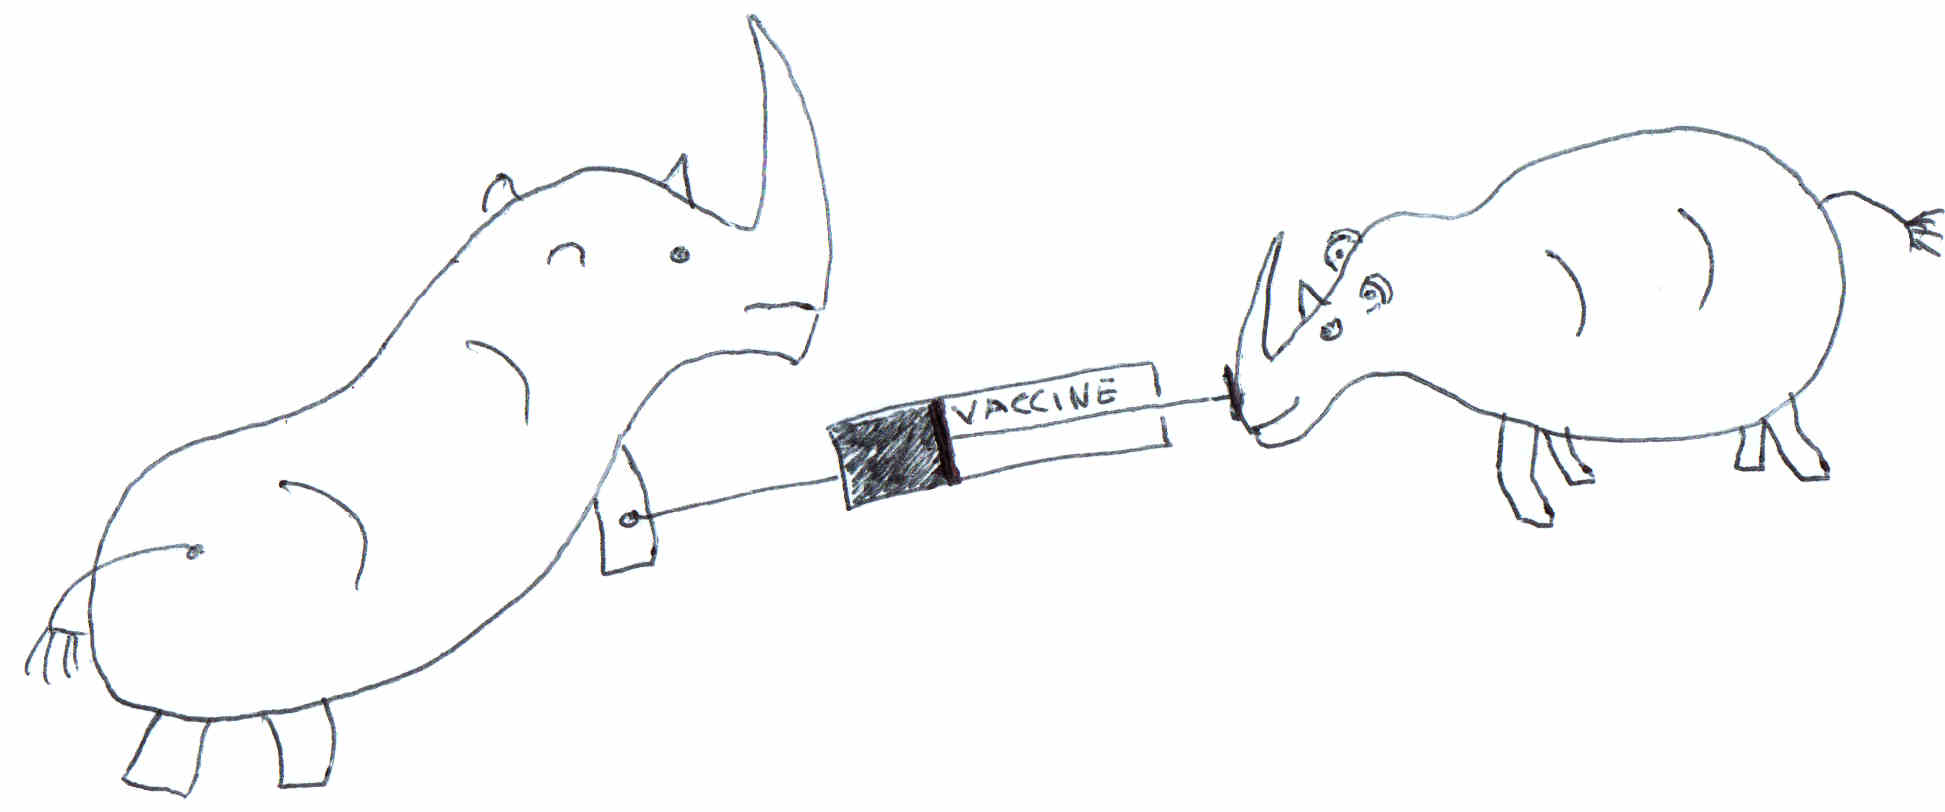 Rhino gets the vaccine